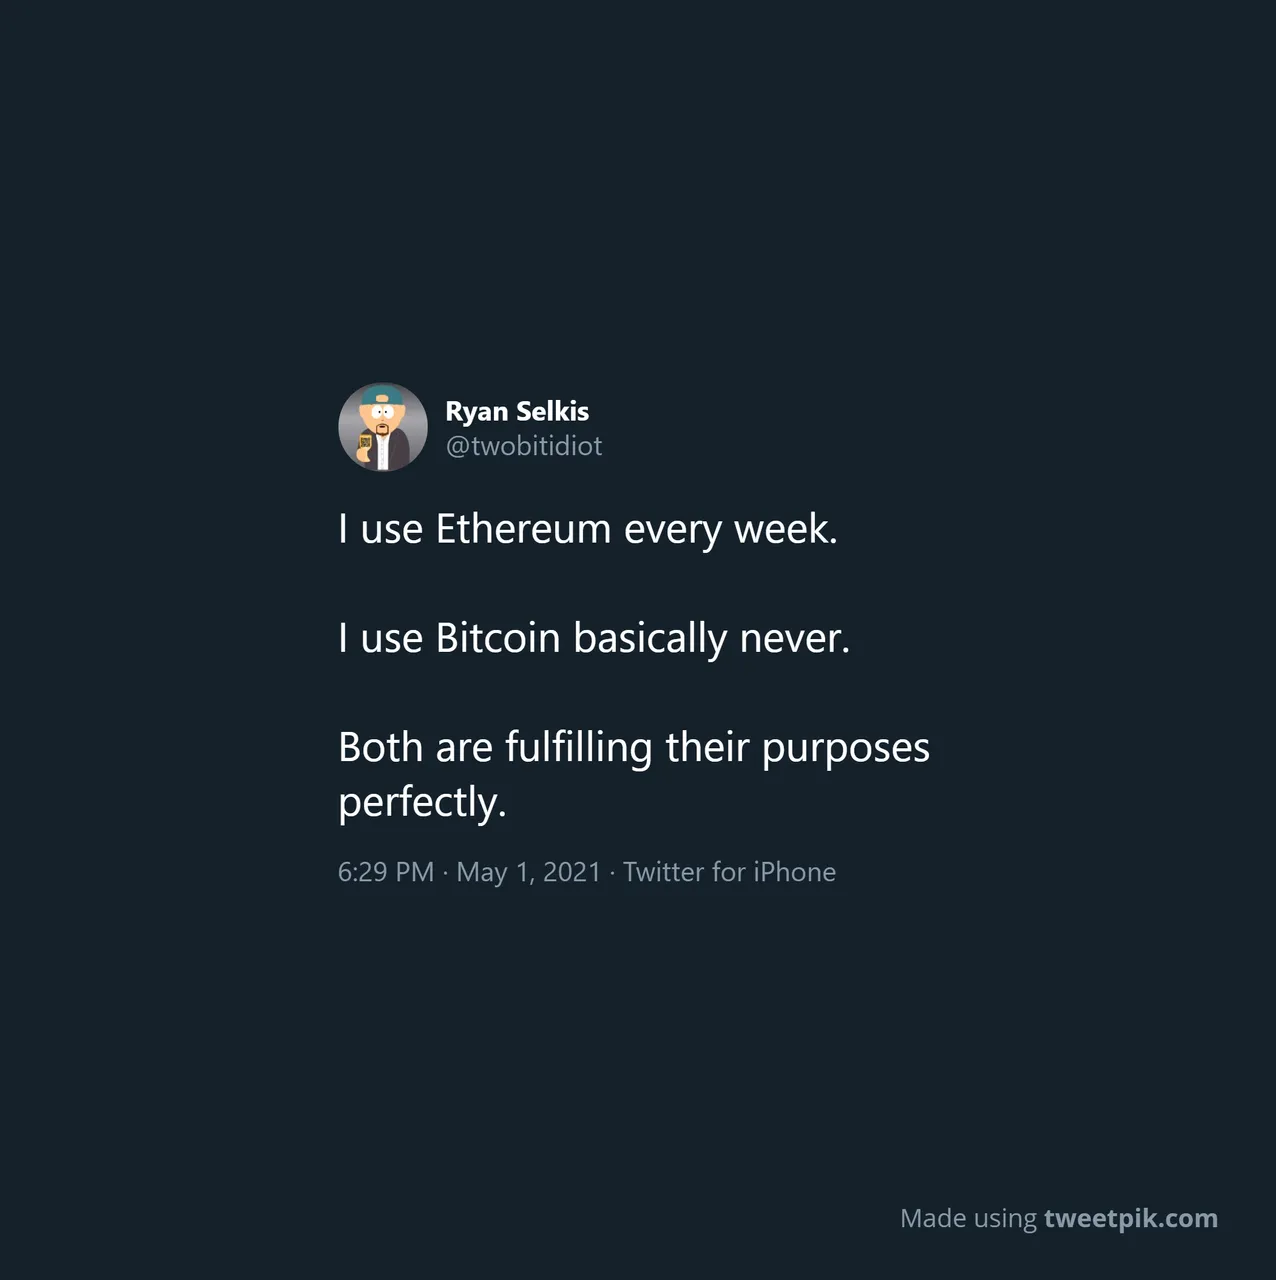 ethereum_and_bitcoin_tweet.png